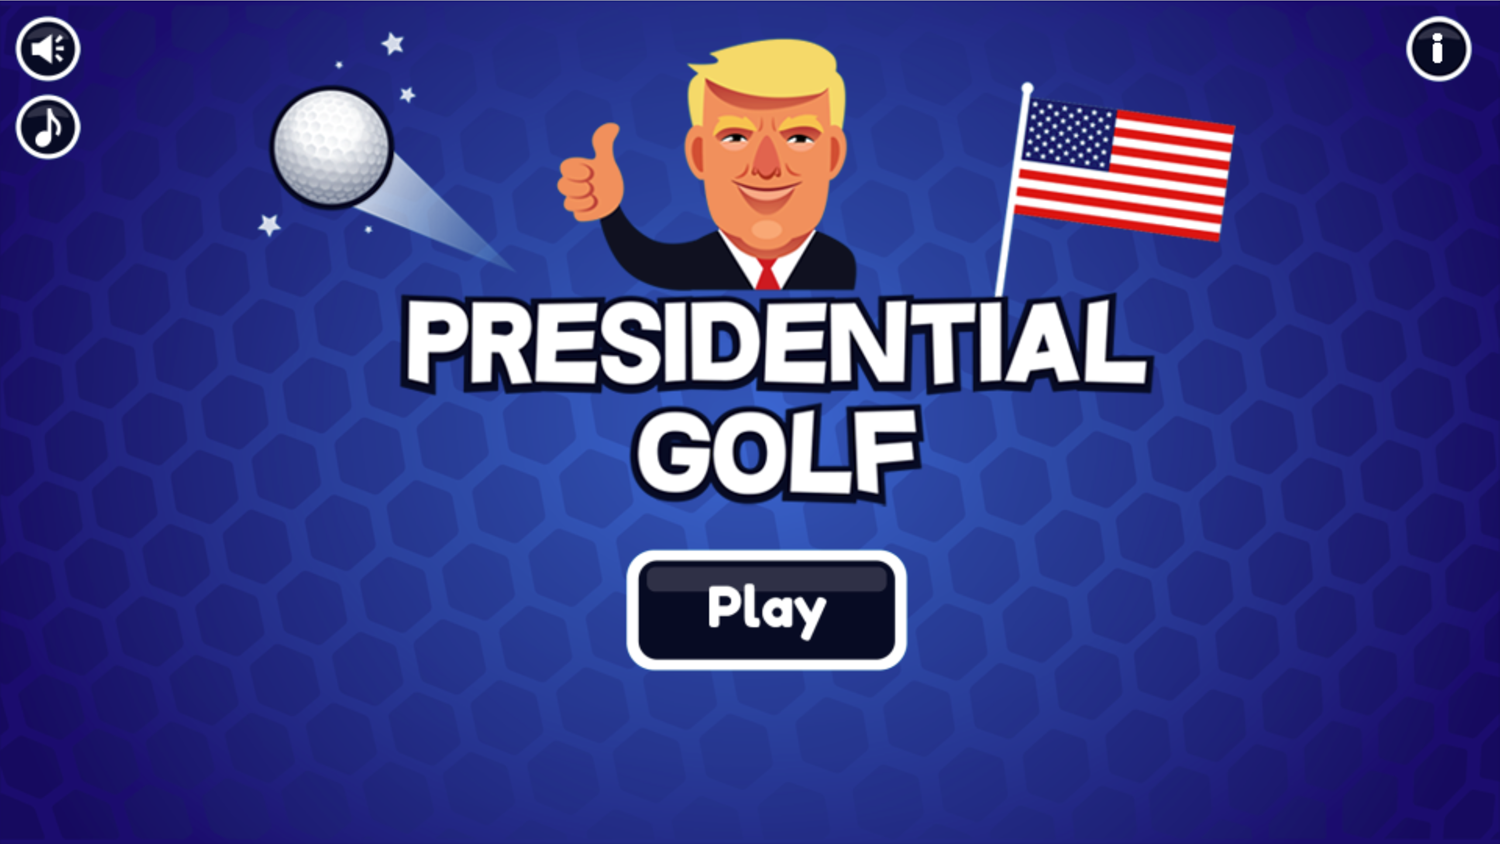 Presidential Golf Game Welcome Screen Screenshot.